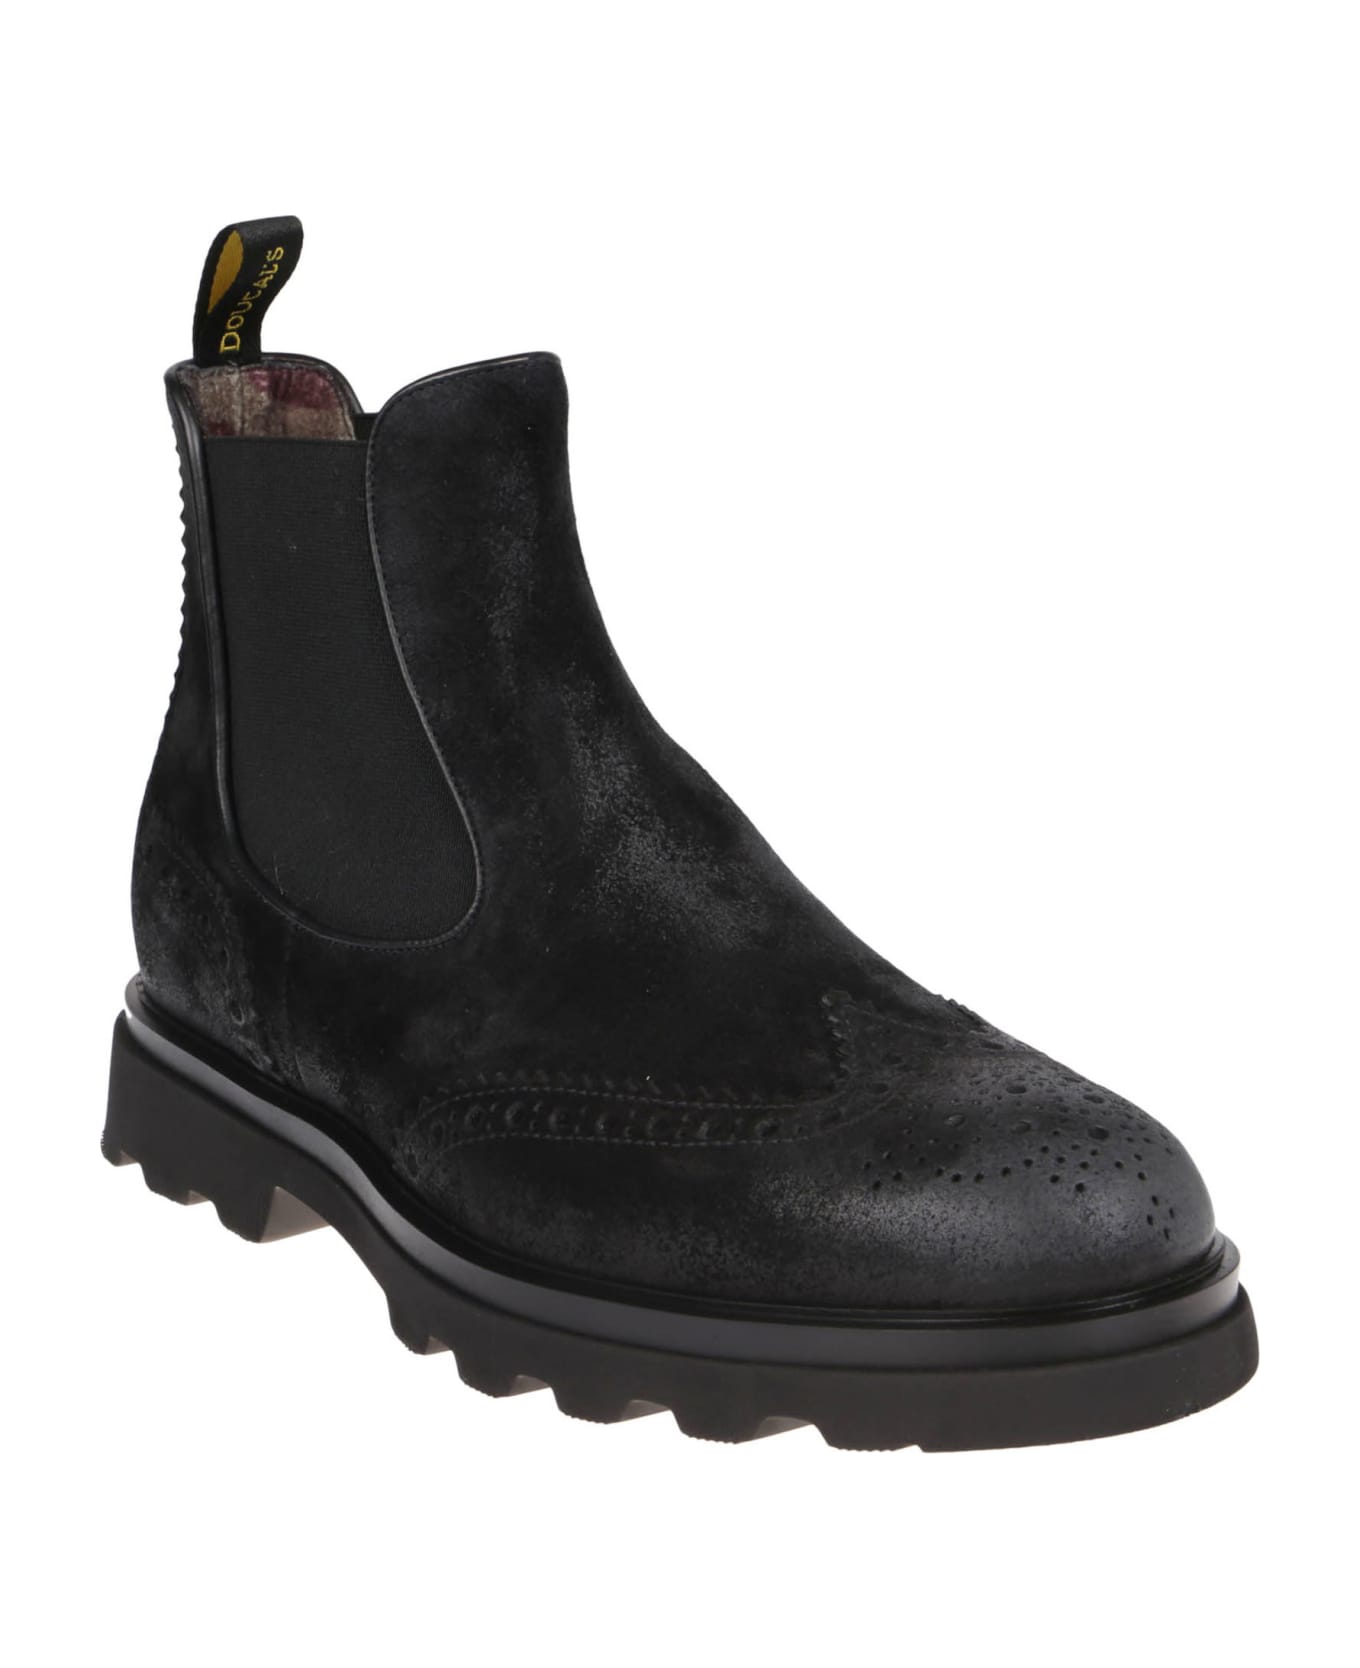 Doucal's Coda Rondine Chelsea Boots - Nero/fondo Nero ブーツ